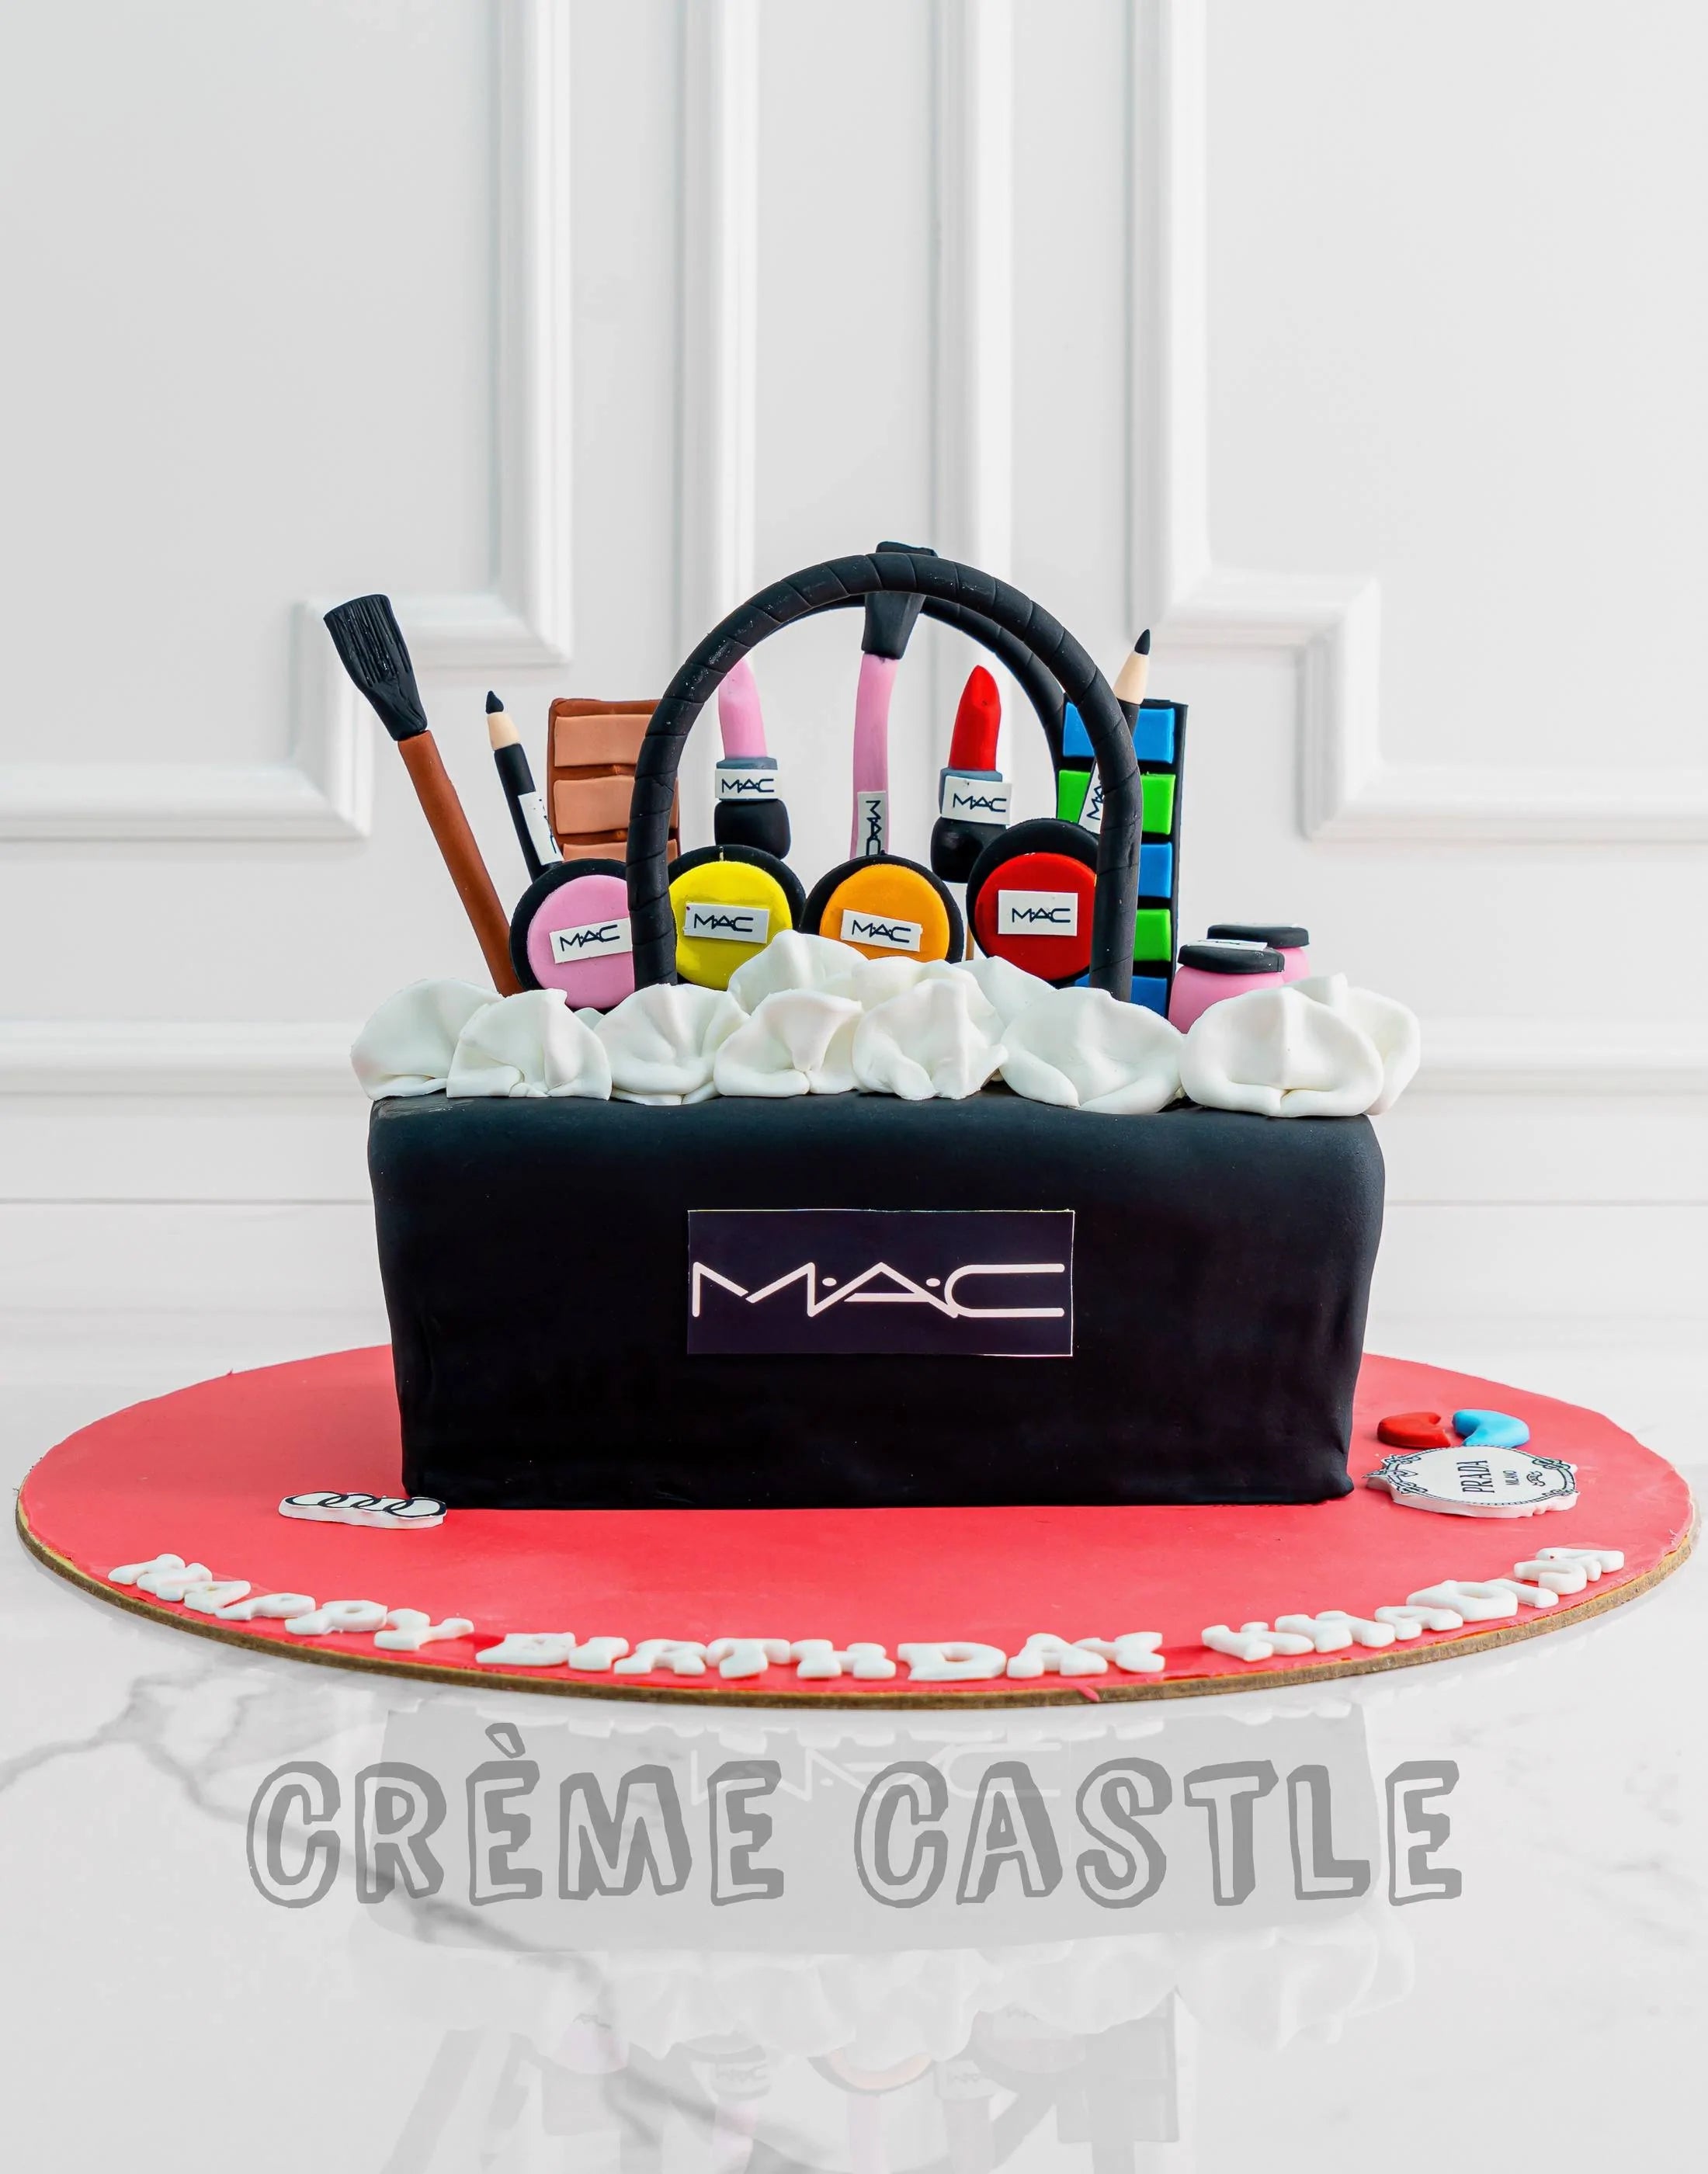 MacBook Cake | Cake decorating flowers, Birthday cakes for men, Book cake